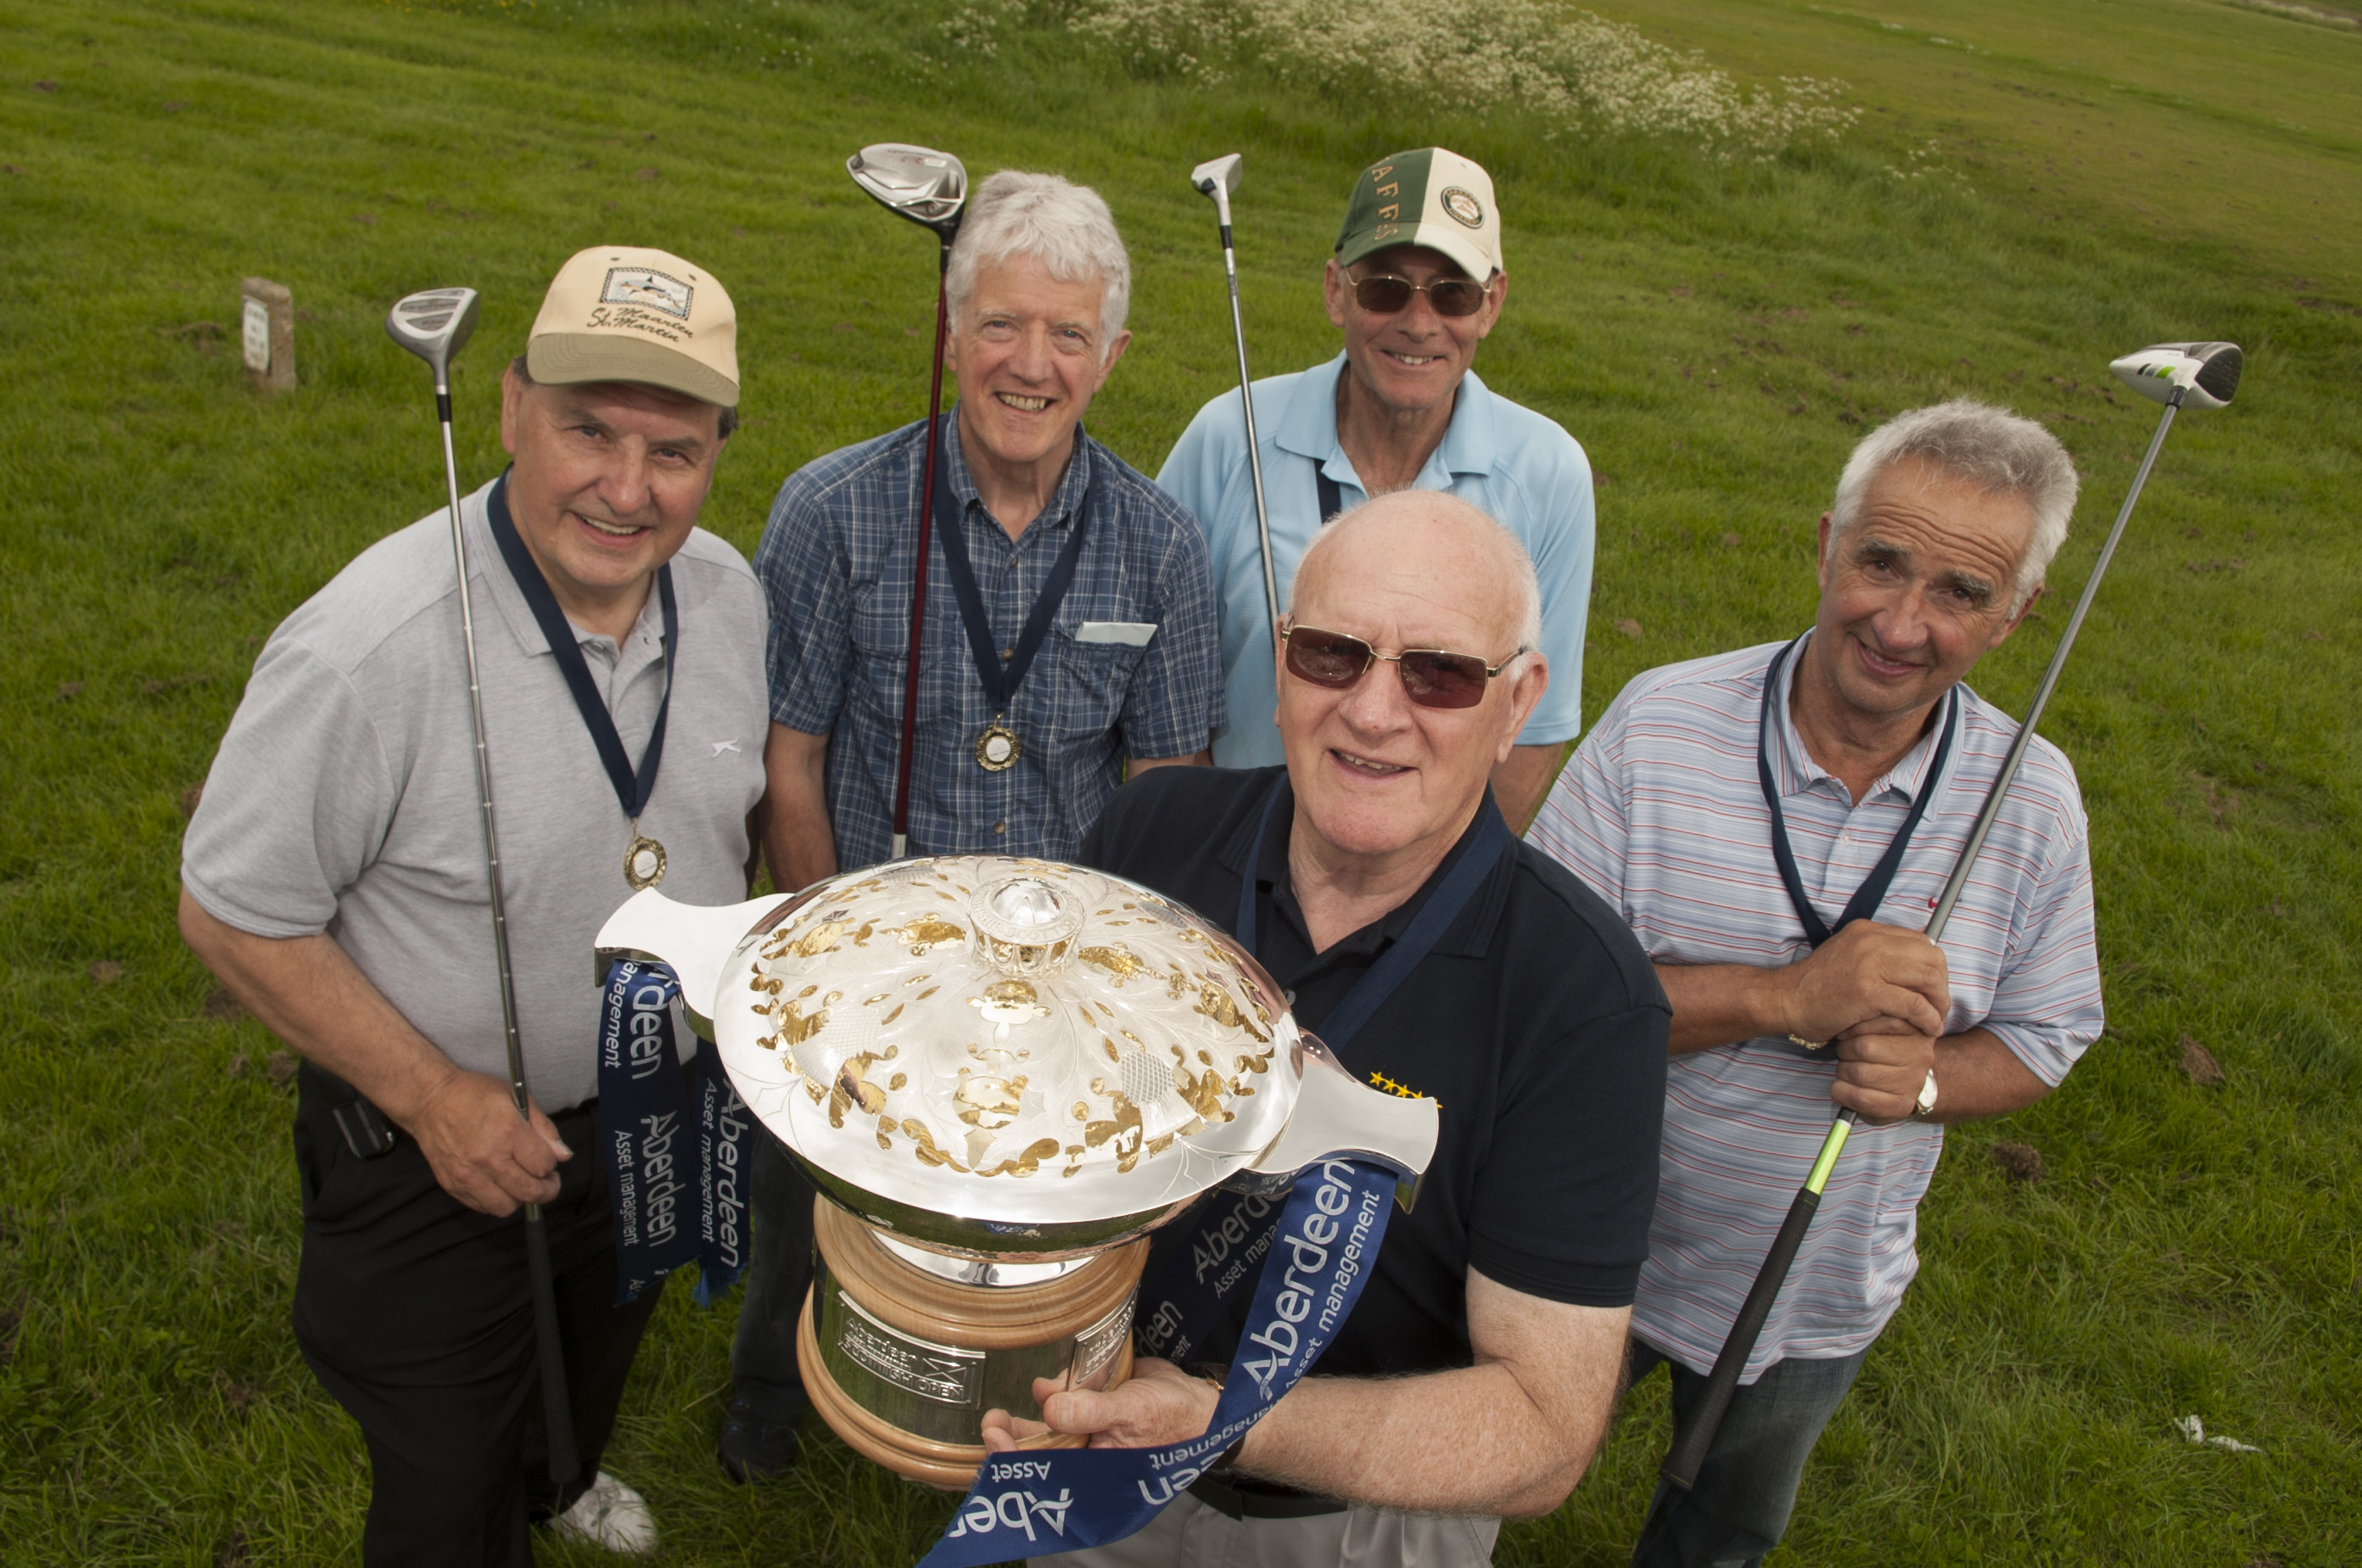 Golden Games golfers grab Scottish Open trophy